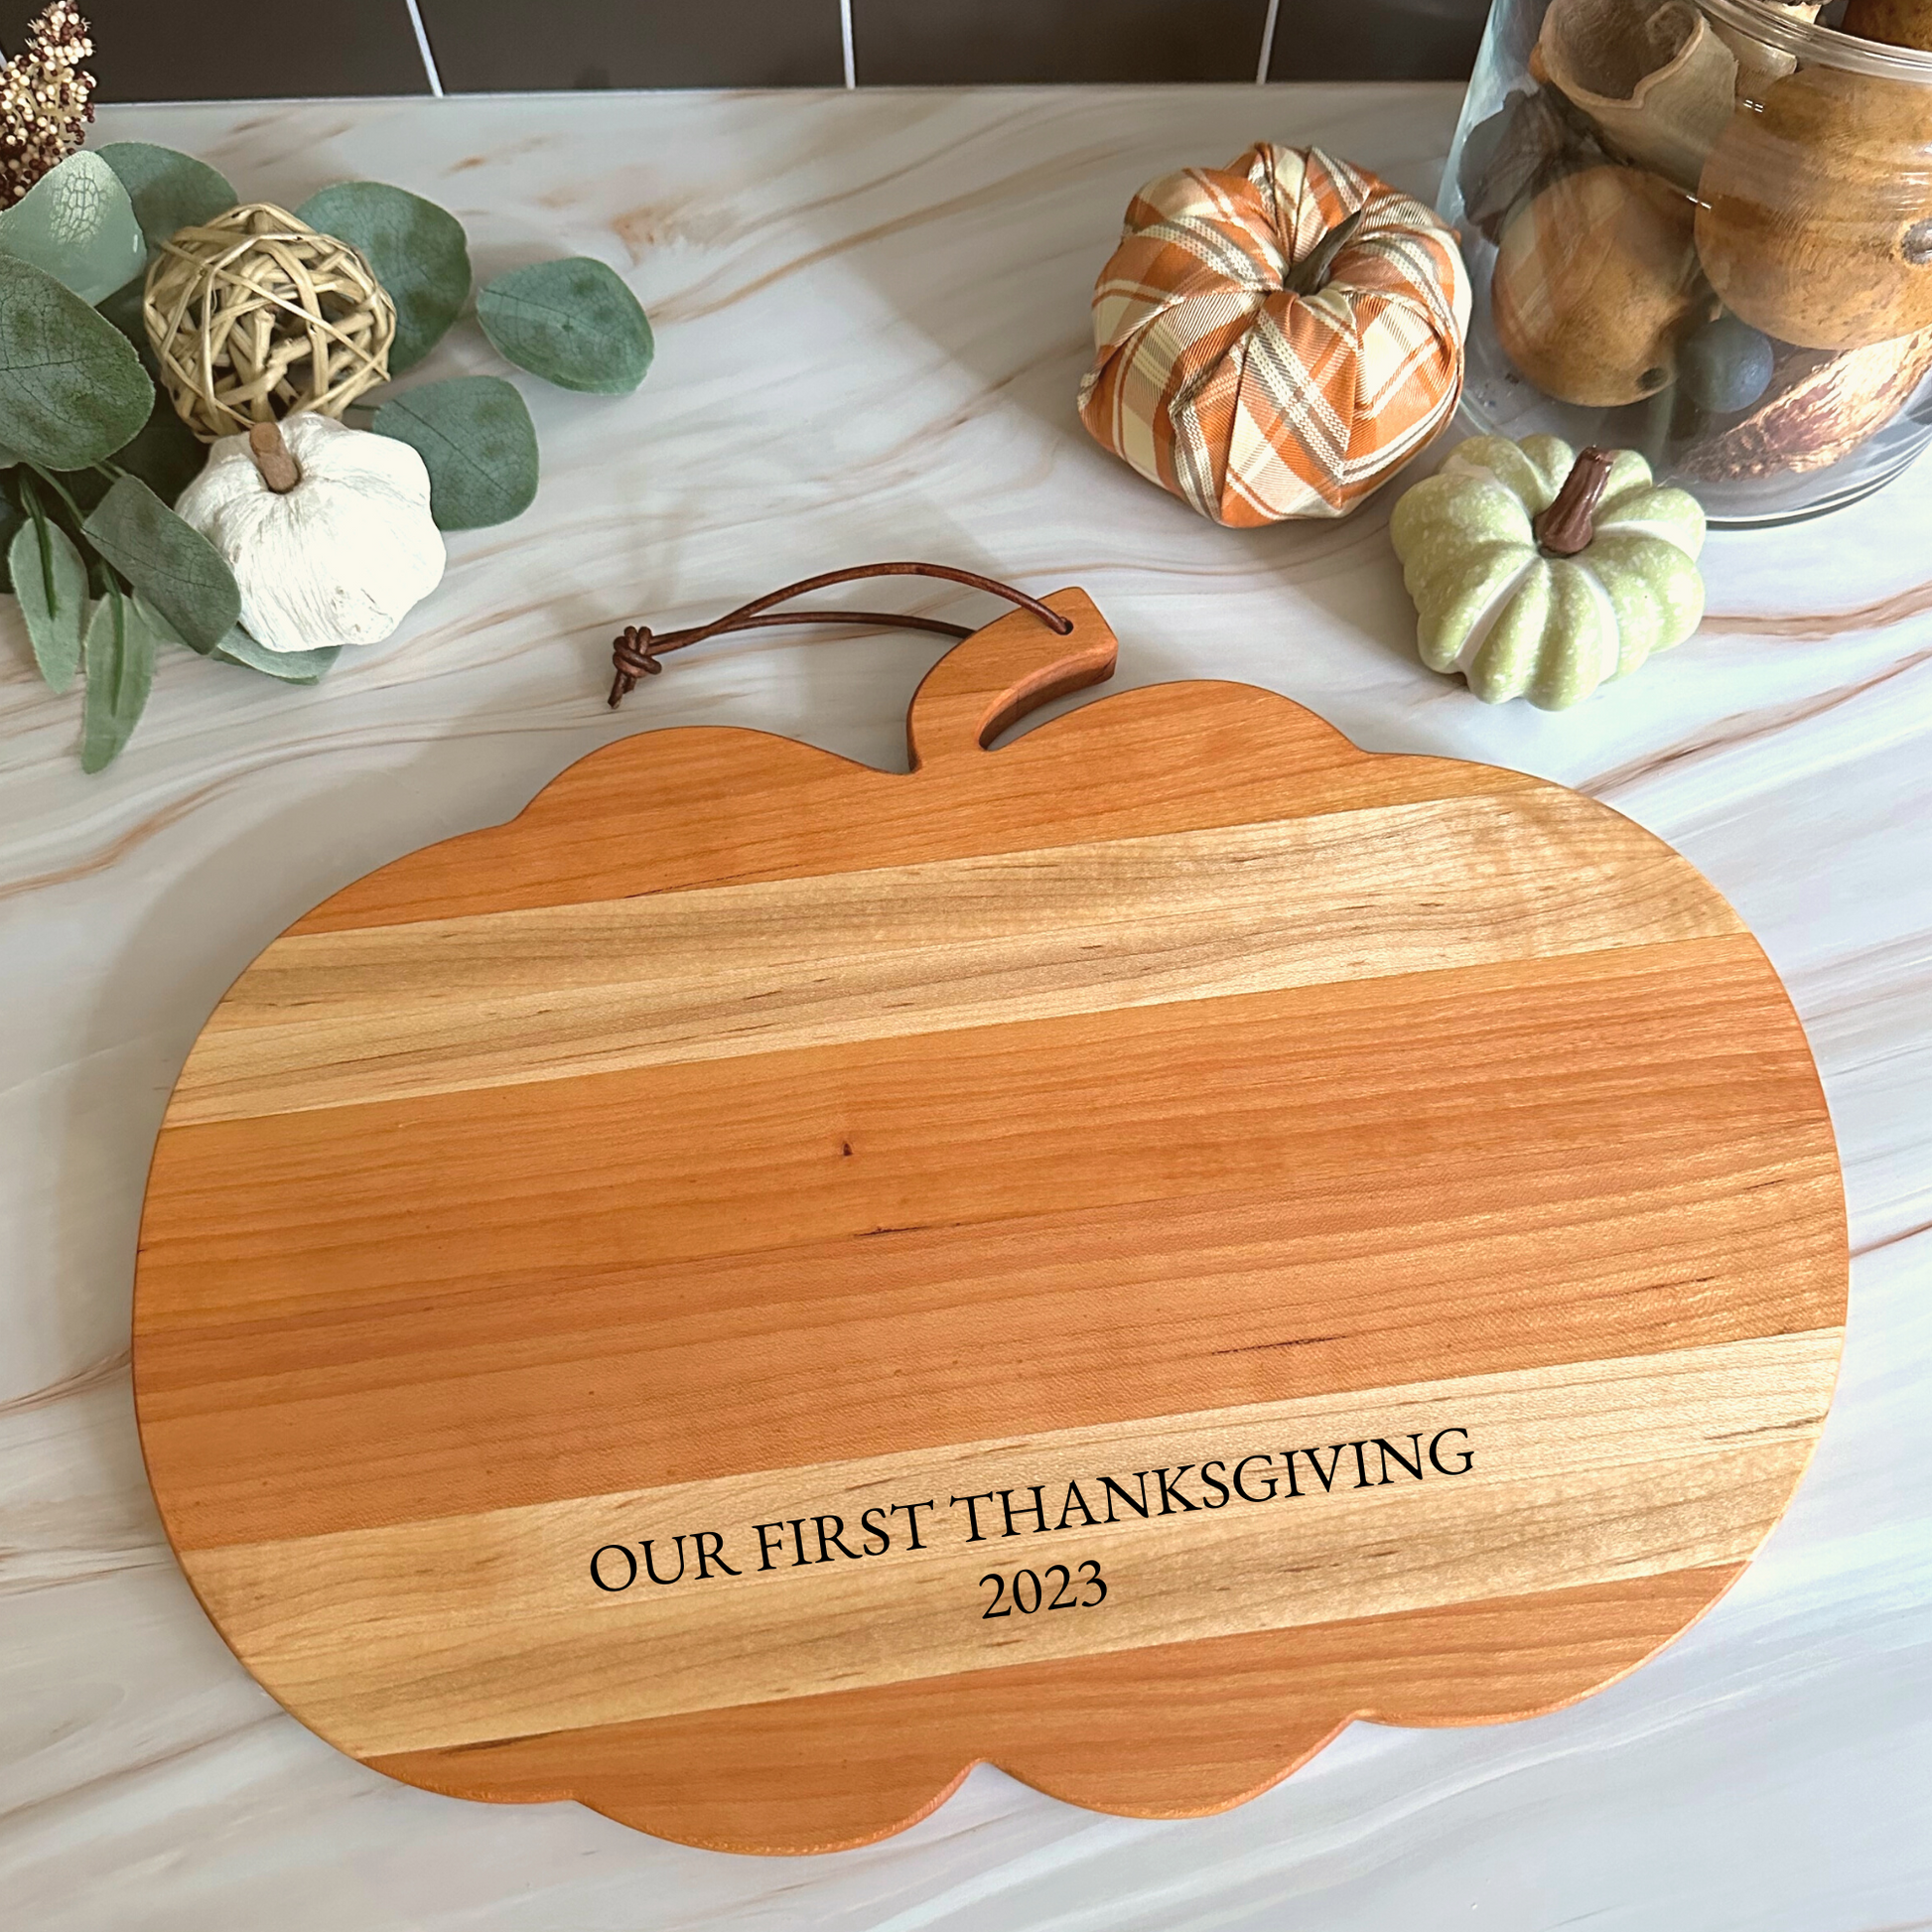 pumpkin shaped cutting board, pumpkin serving tray, pumpkin charcuterie board